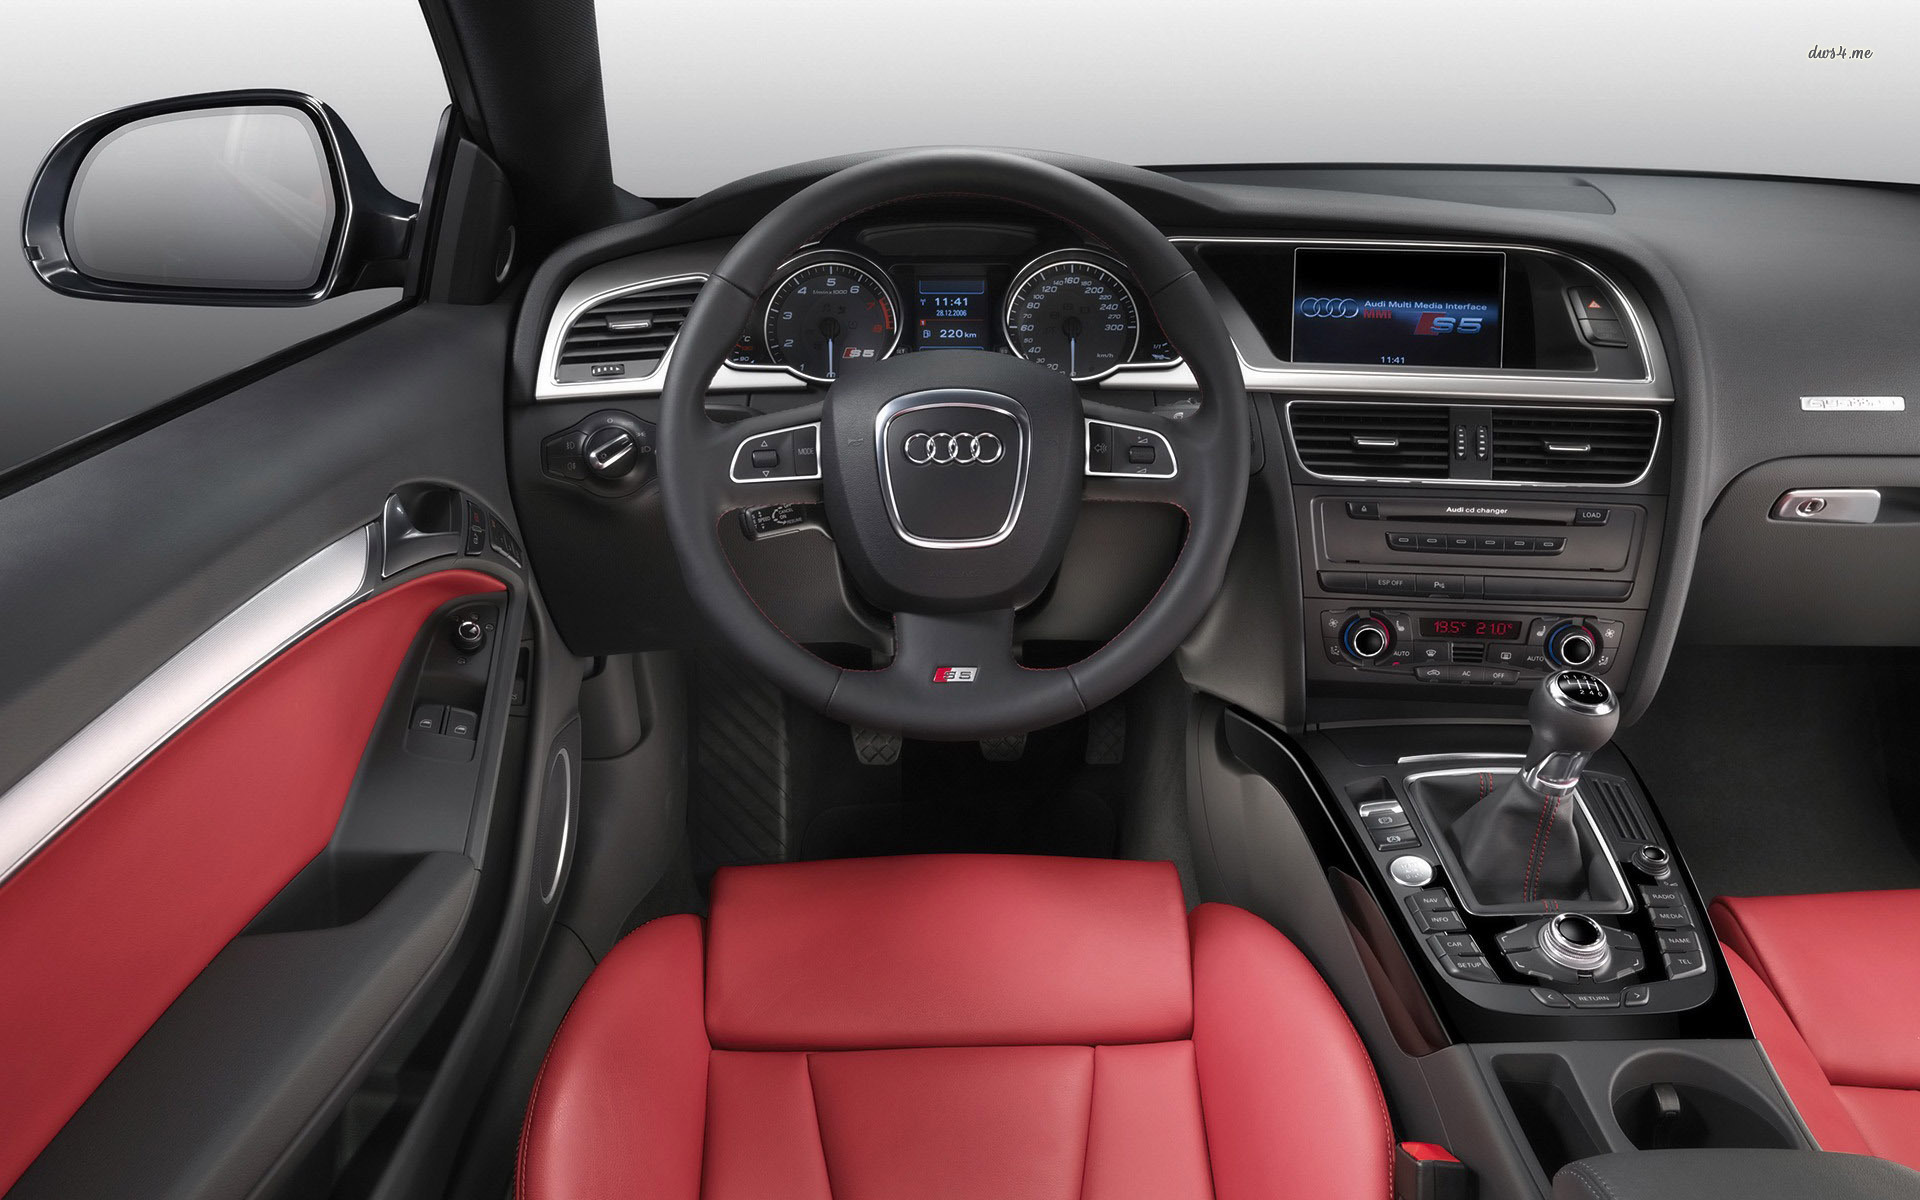 2013 Audi A5 Red Interior - HD Wallpaper 